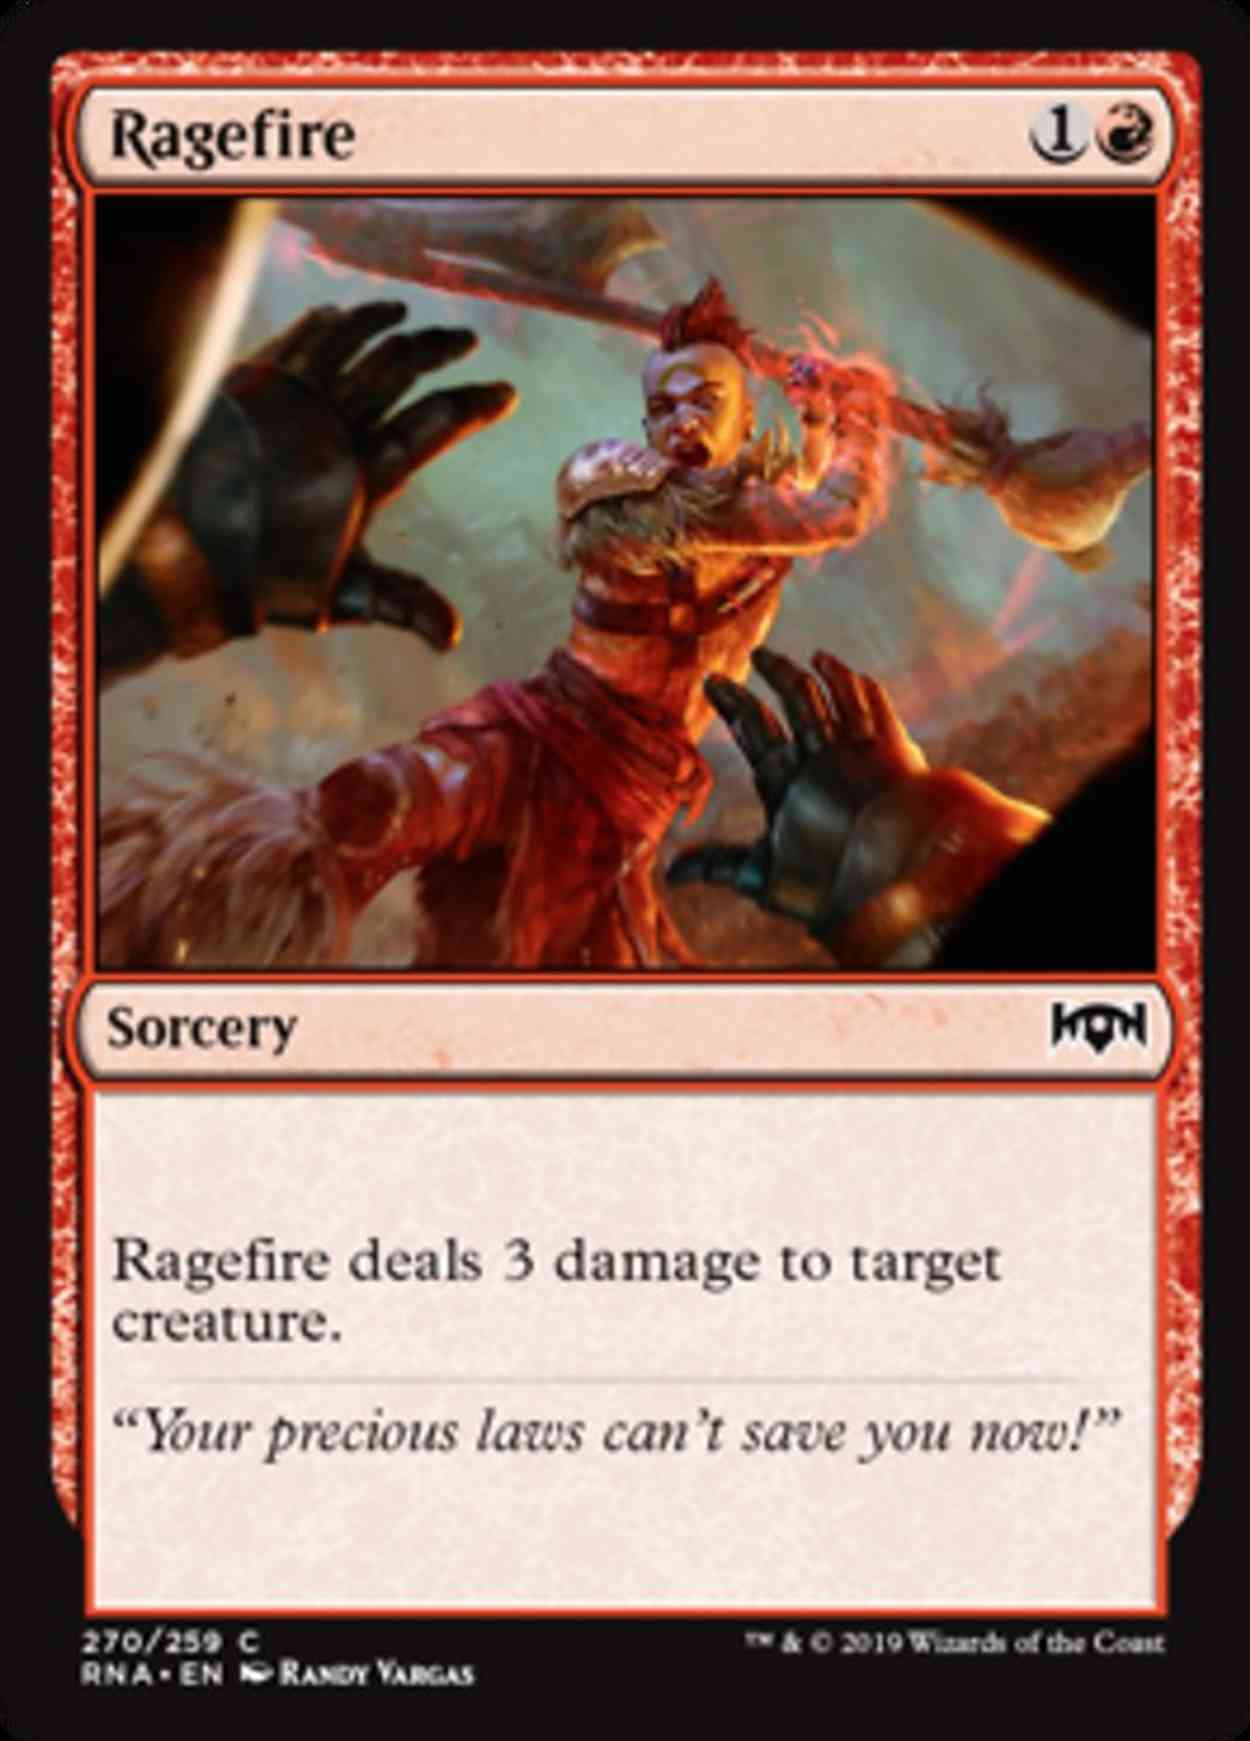 Ragefire magic card front